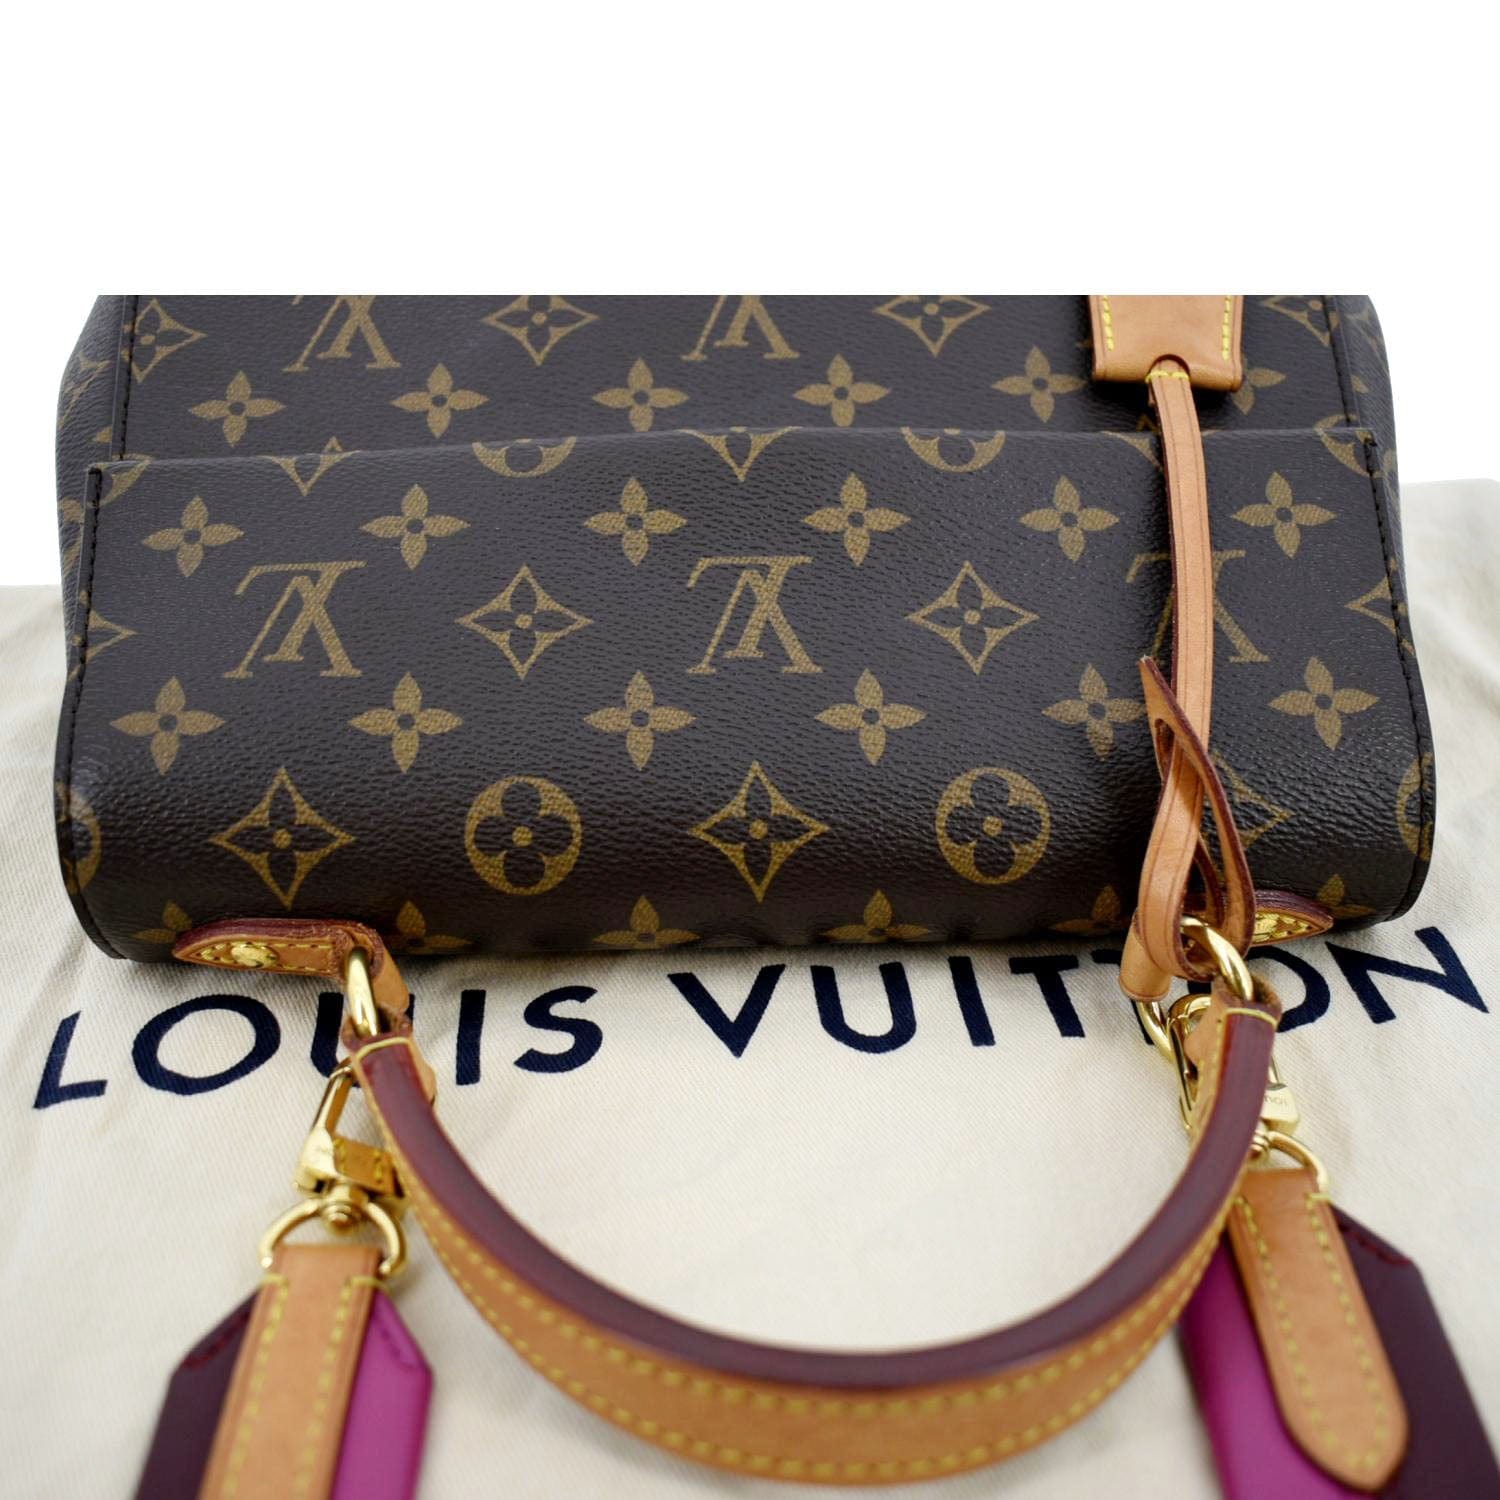 Louis Vuitton Monogram Canvas Cluny MM Bag Louis Vuitton